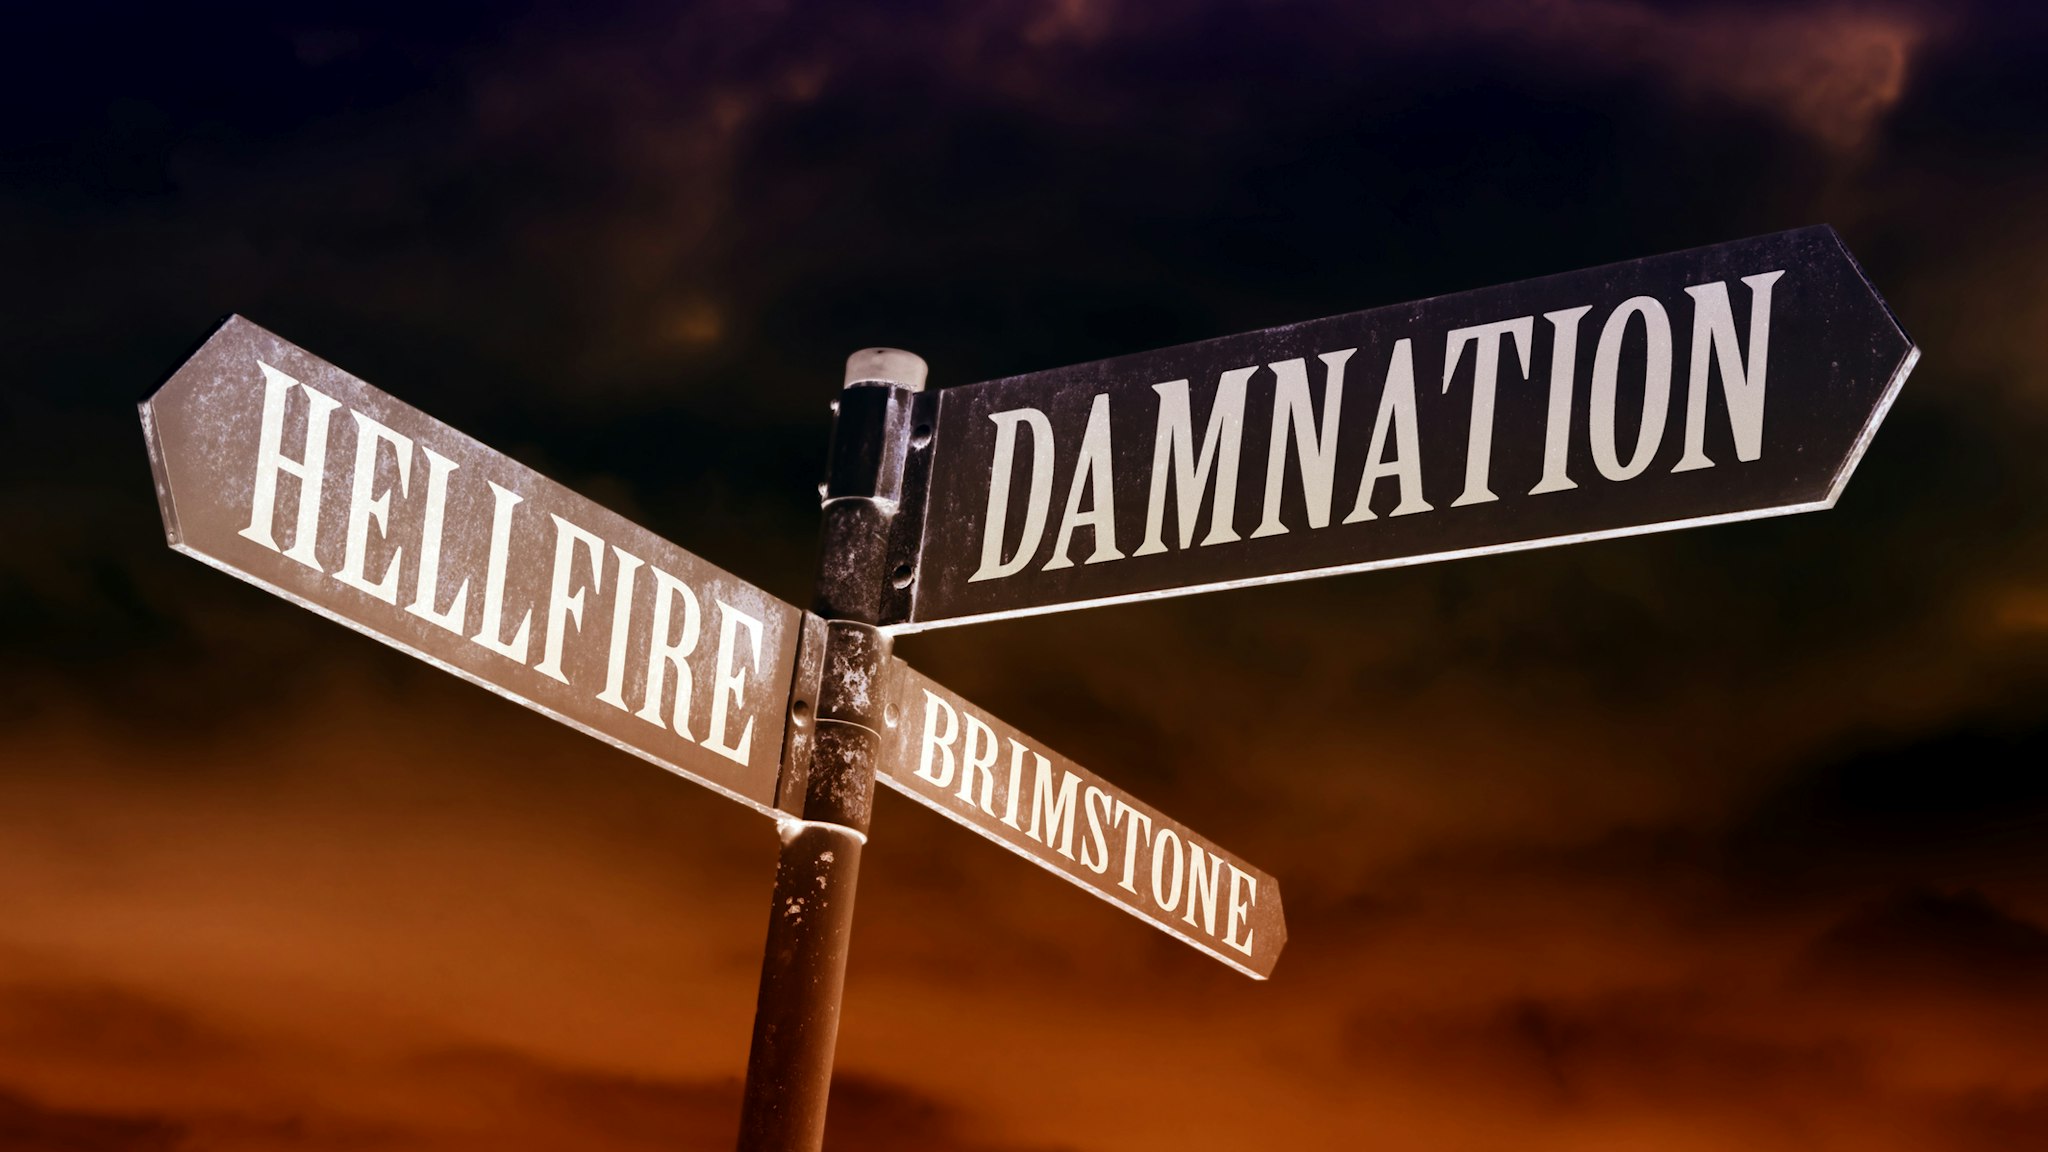 Hellfire, brimstone and damnation directions - stock photo